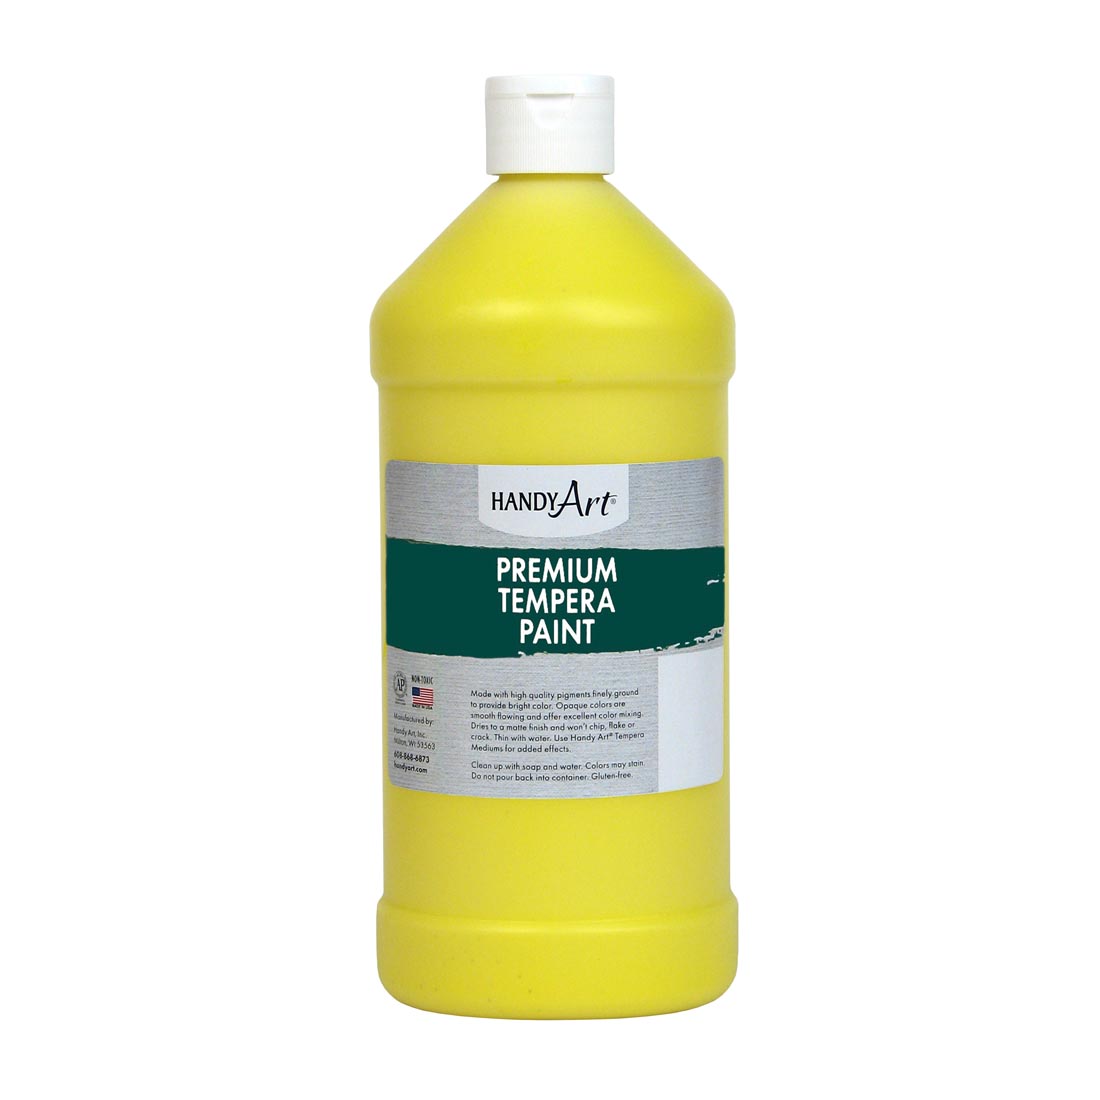 Quart bottle of Yellow Handy Art Premium Tempera Paint